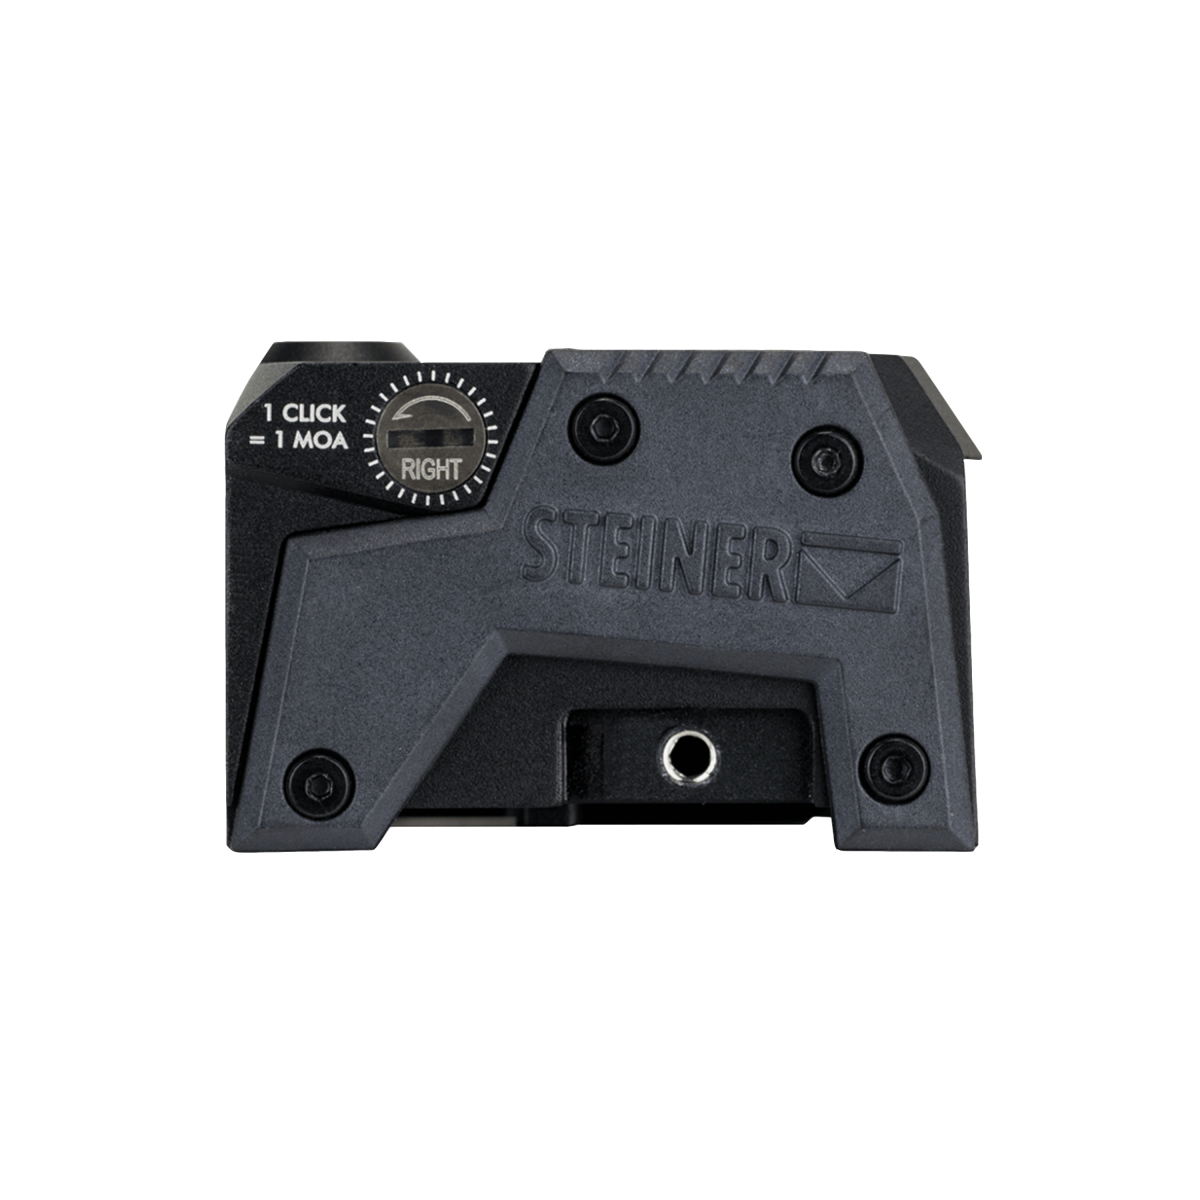 Steiner Micro Pistol 3.3 MOA Red Dot Sight